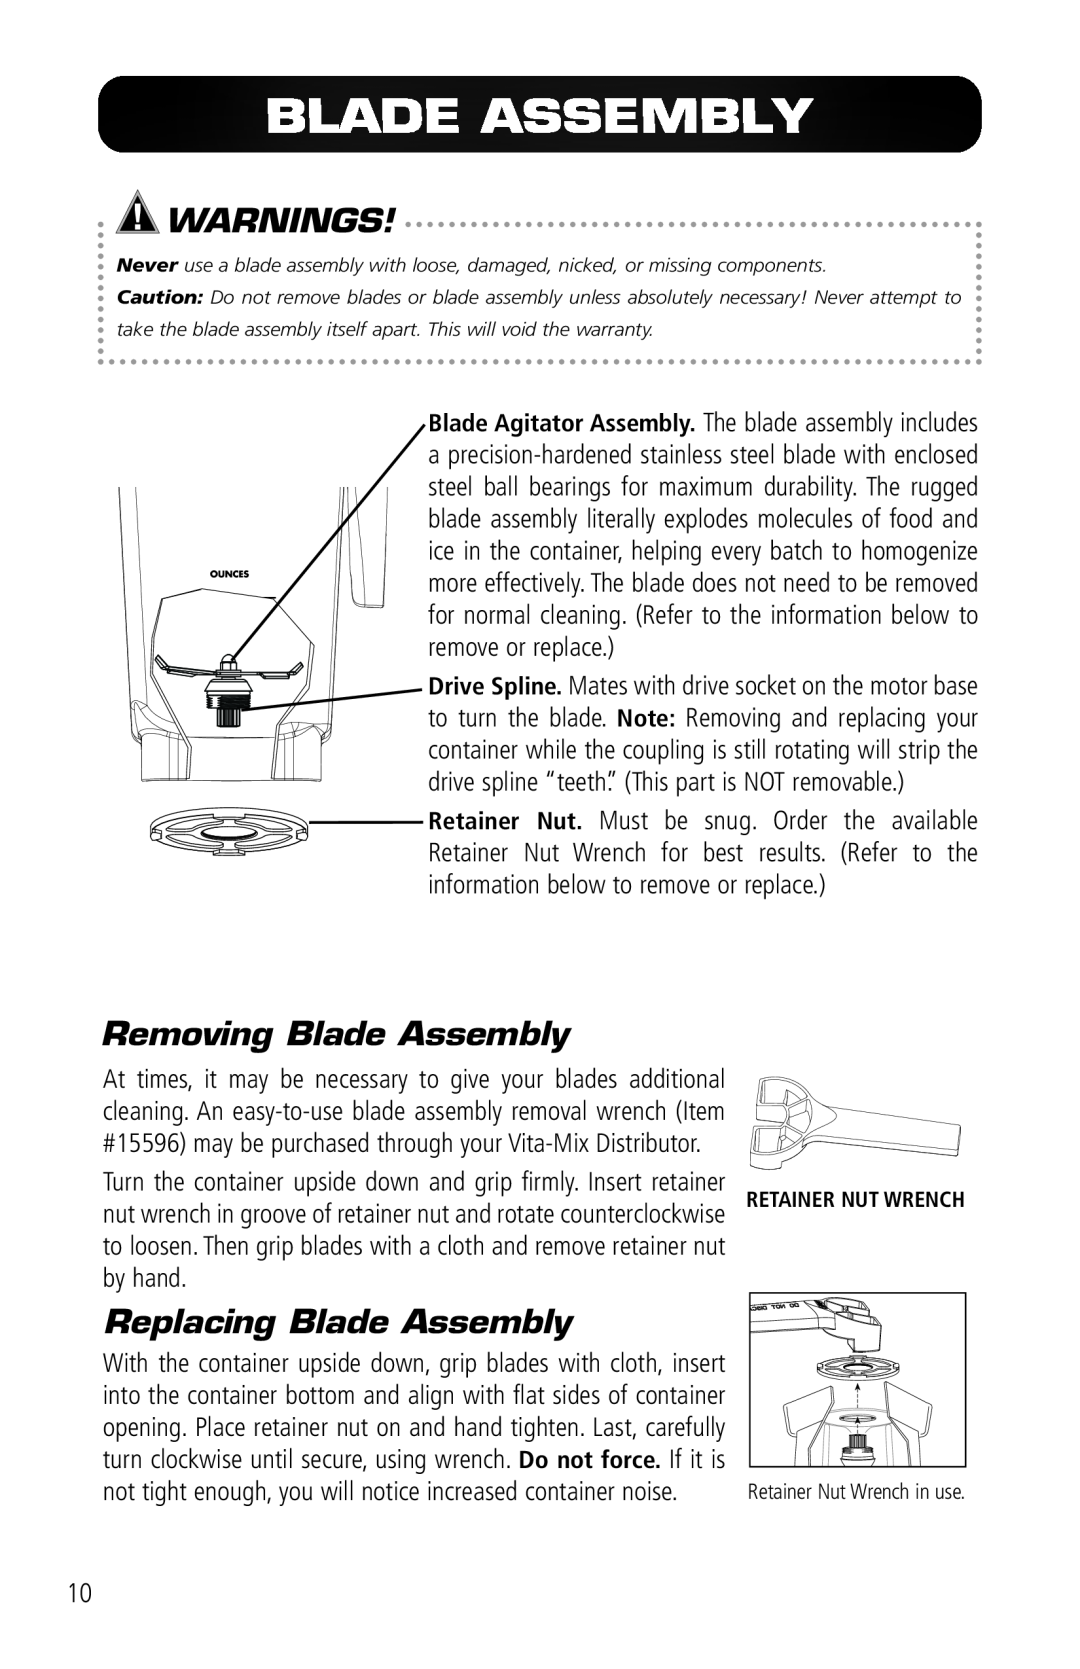 Vita-Mix VM0141 manual Removing Blade Assembly, Replacing Blade Assembly, Warnings 